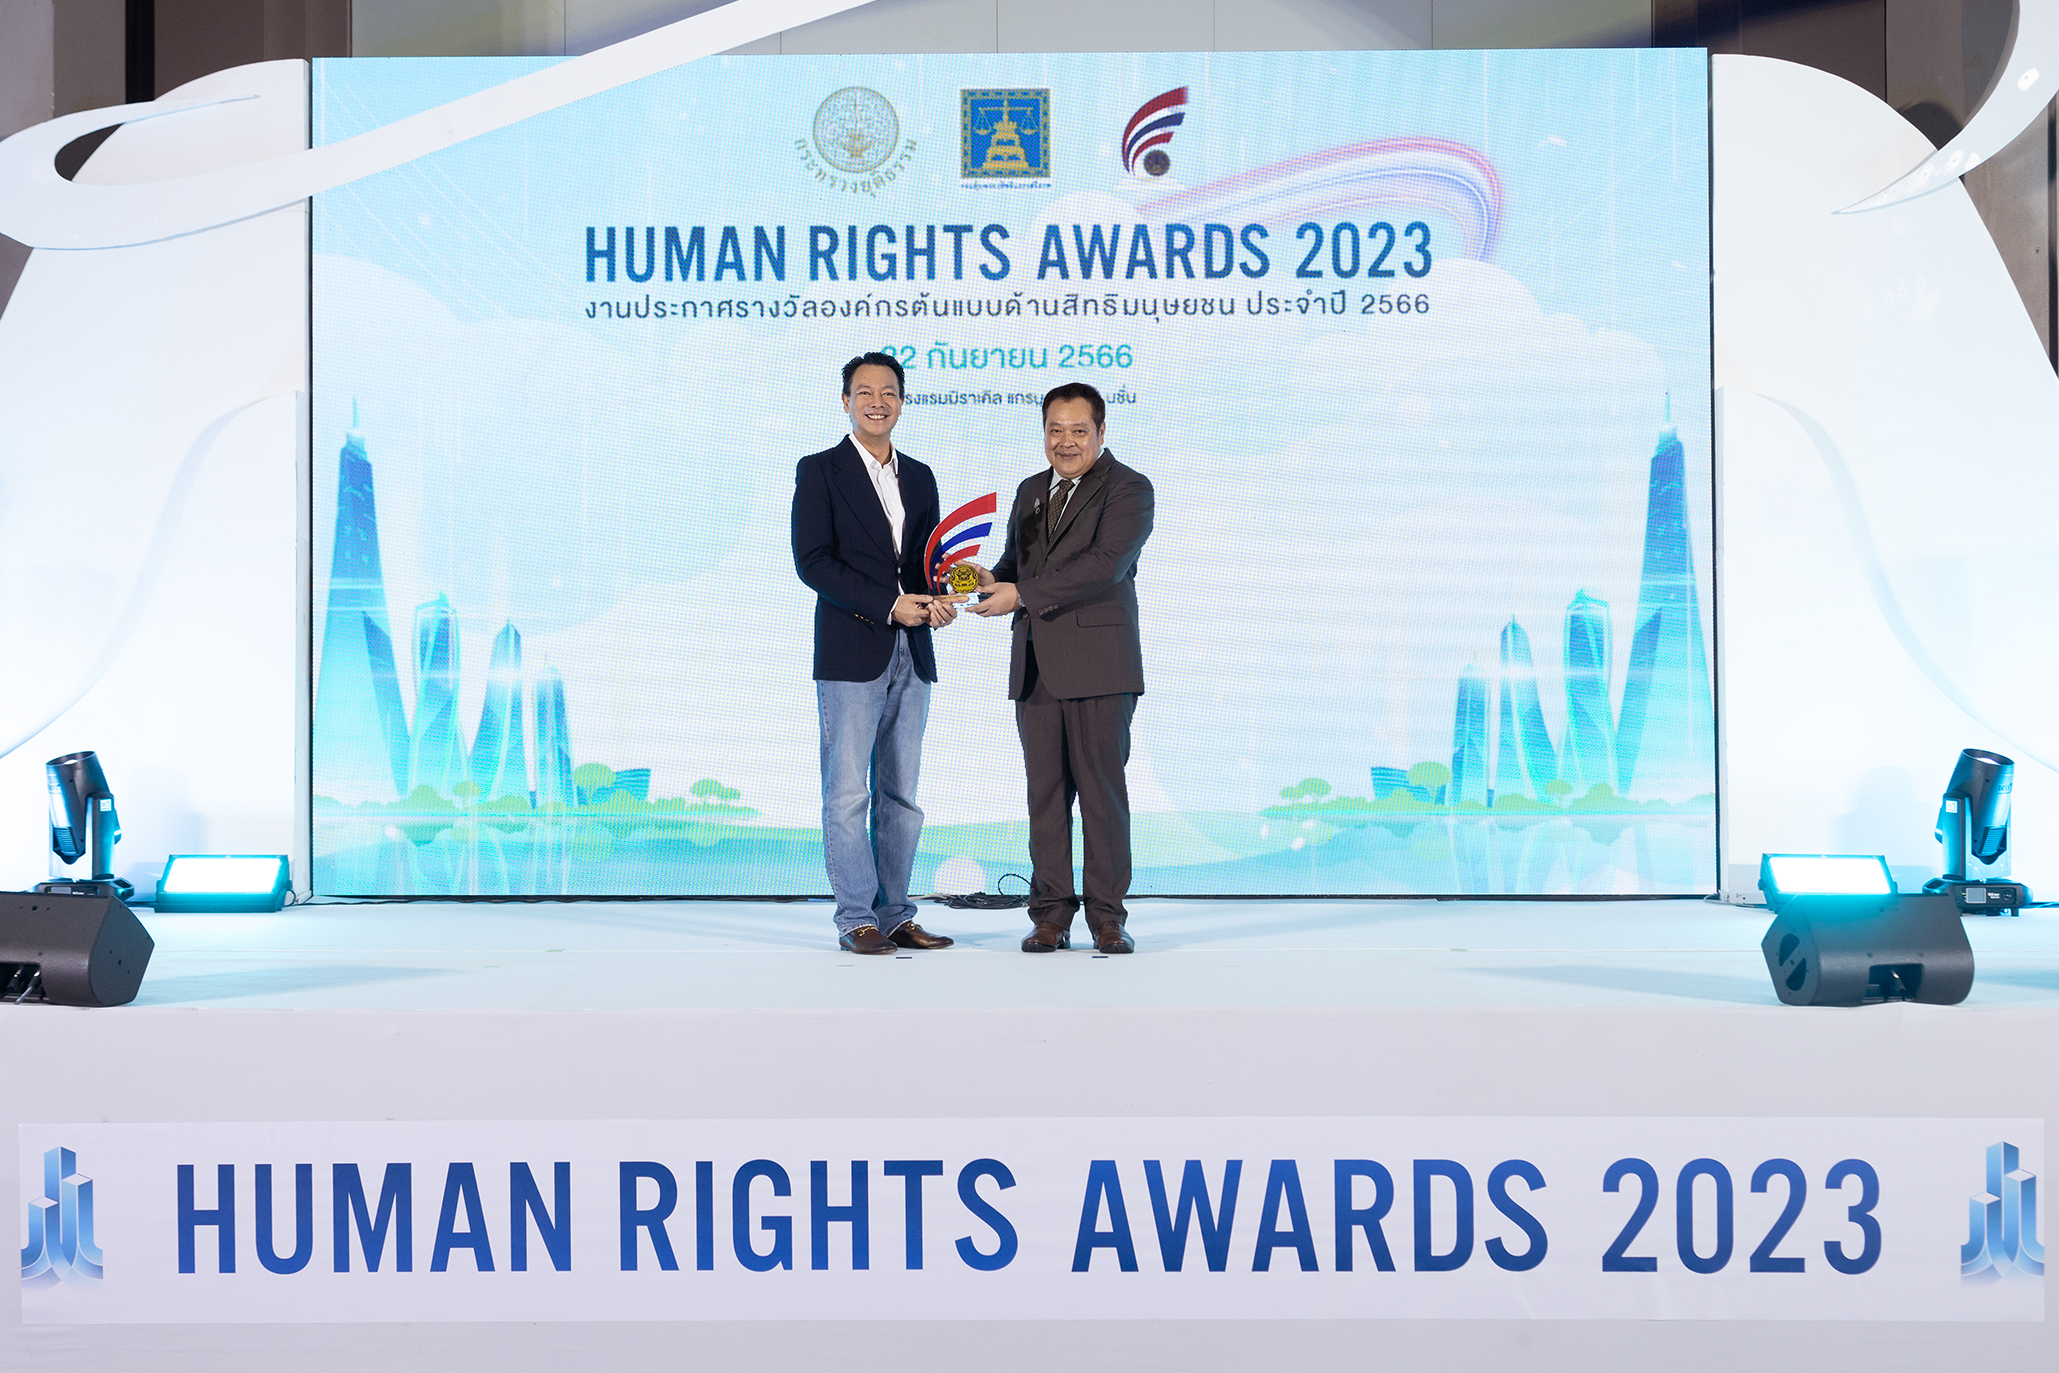 EXIM Thailand Wins “Human Rights Award 2023”